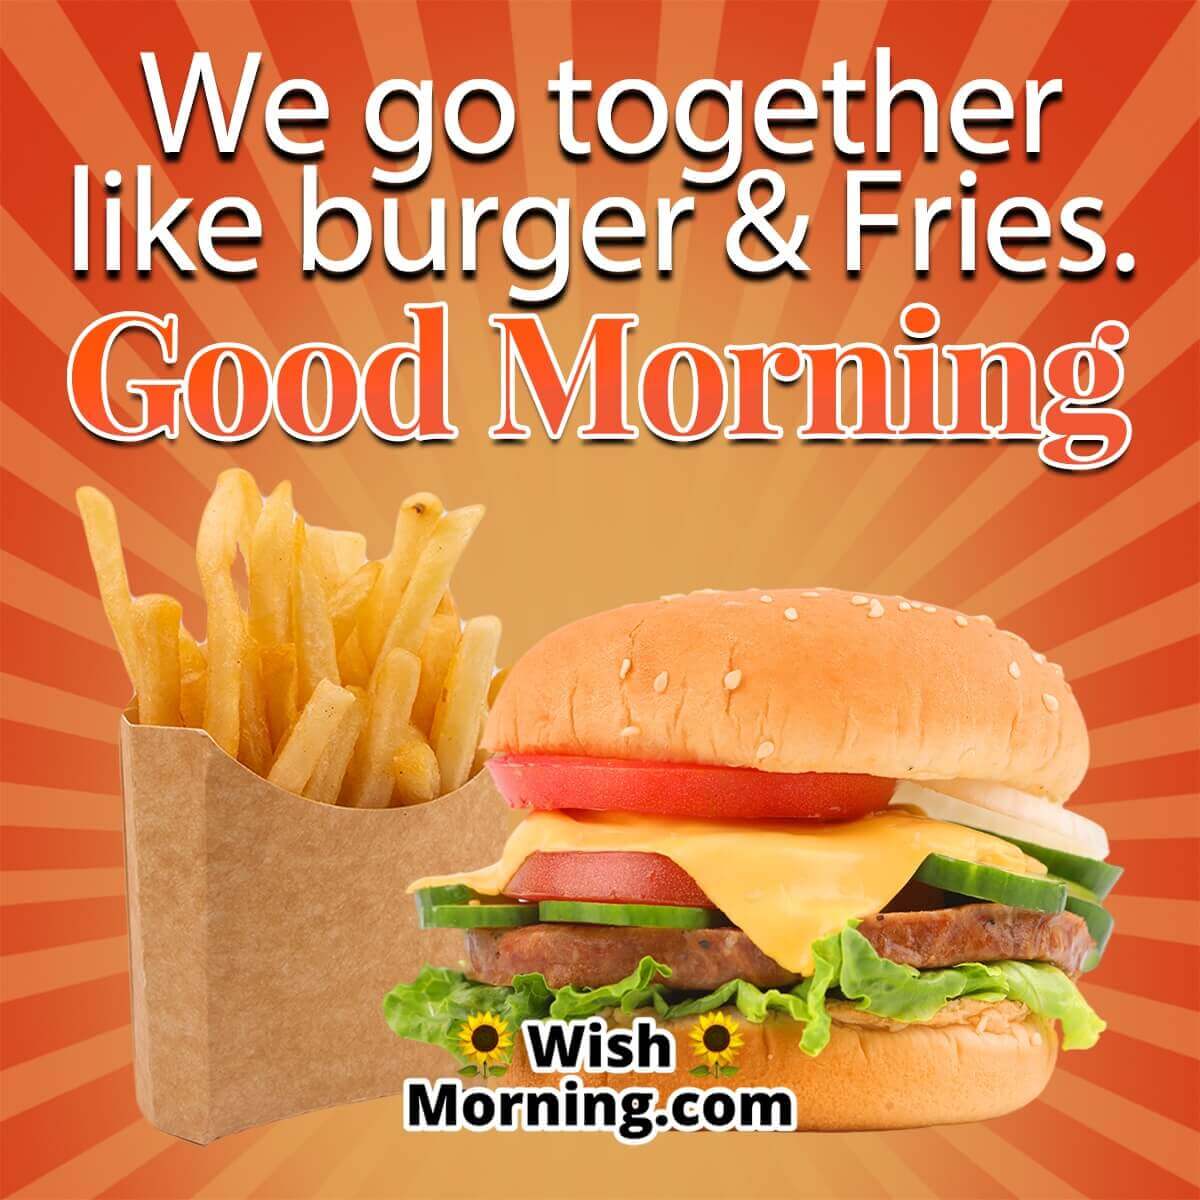 Good Morning Burger And Fries